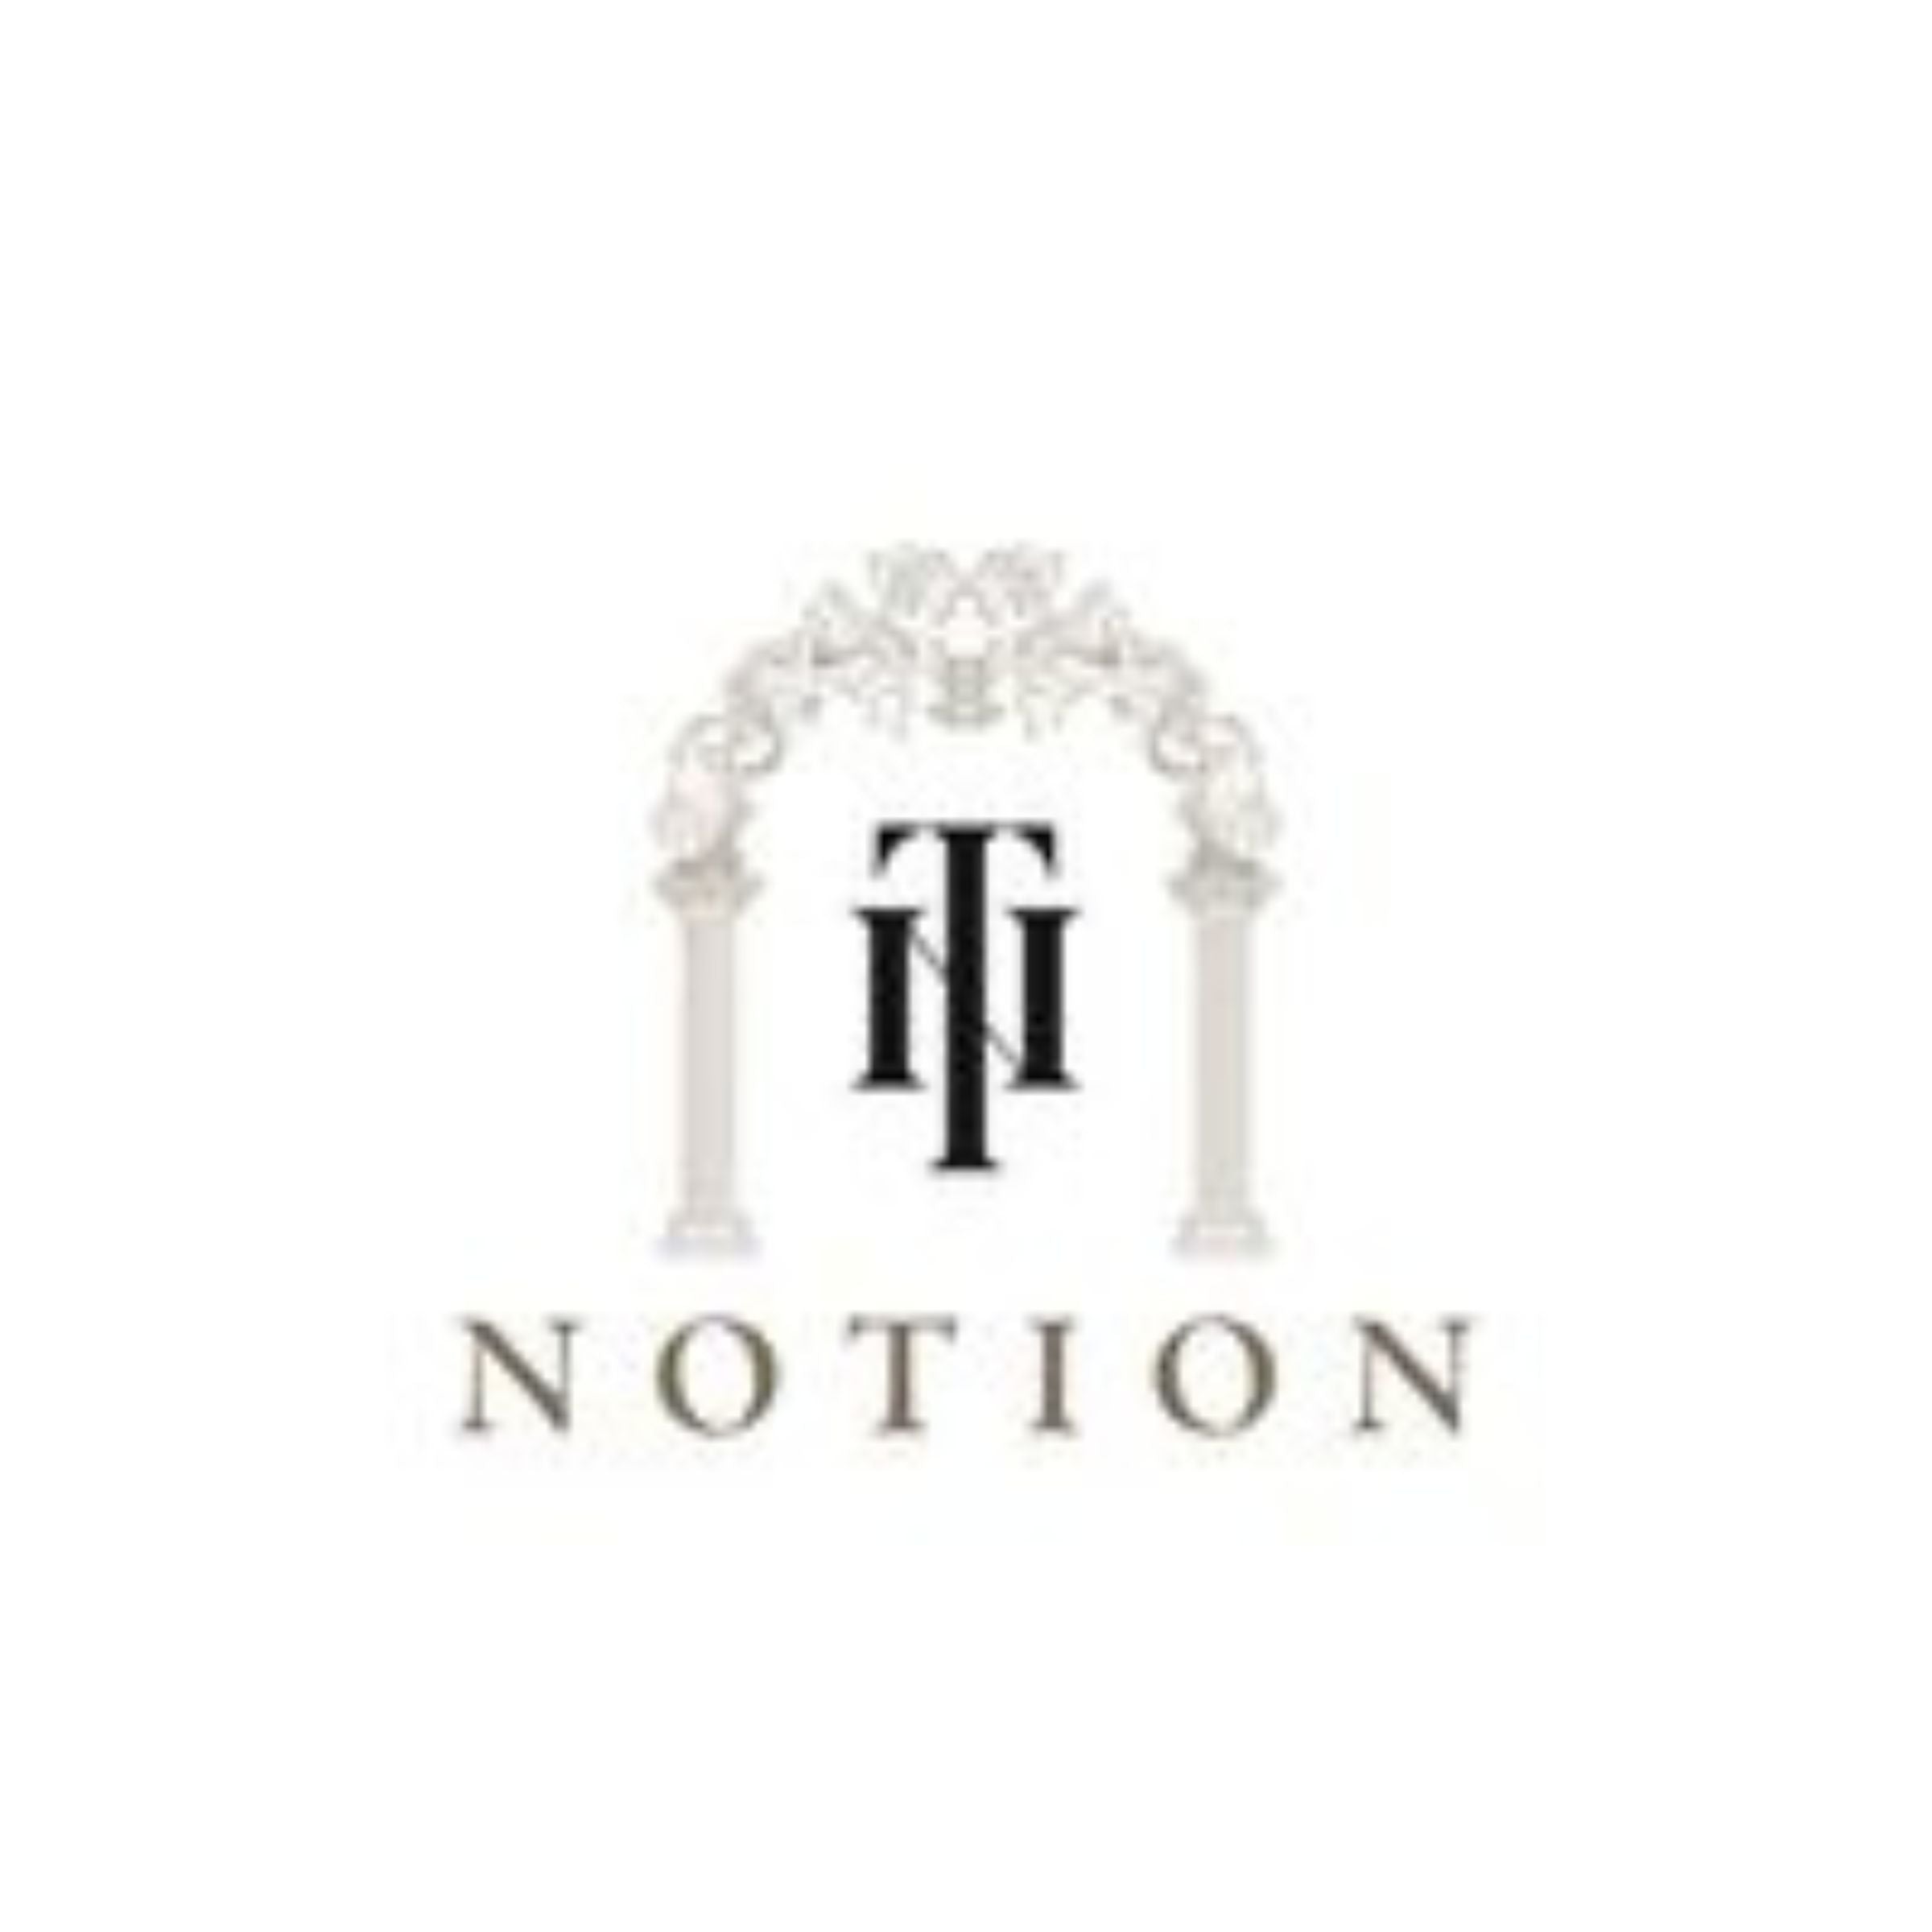 Notion cafe jaipur logo